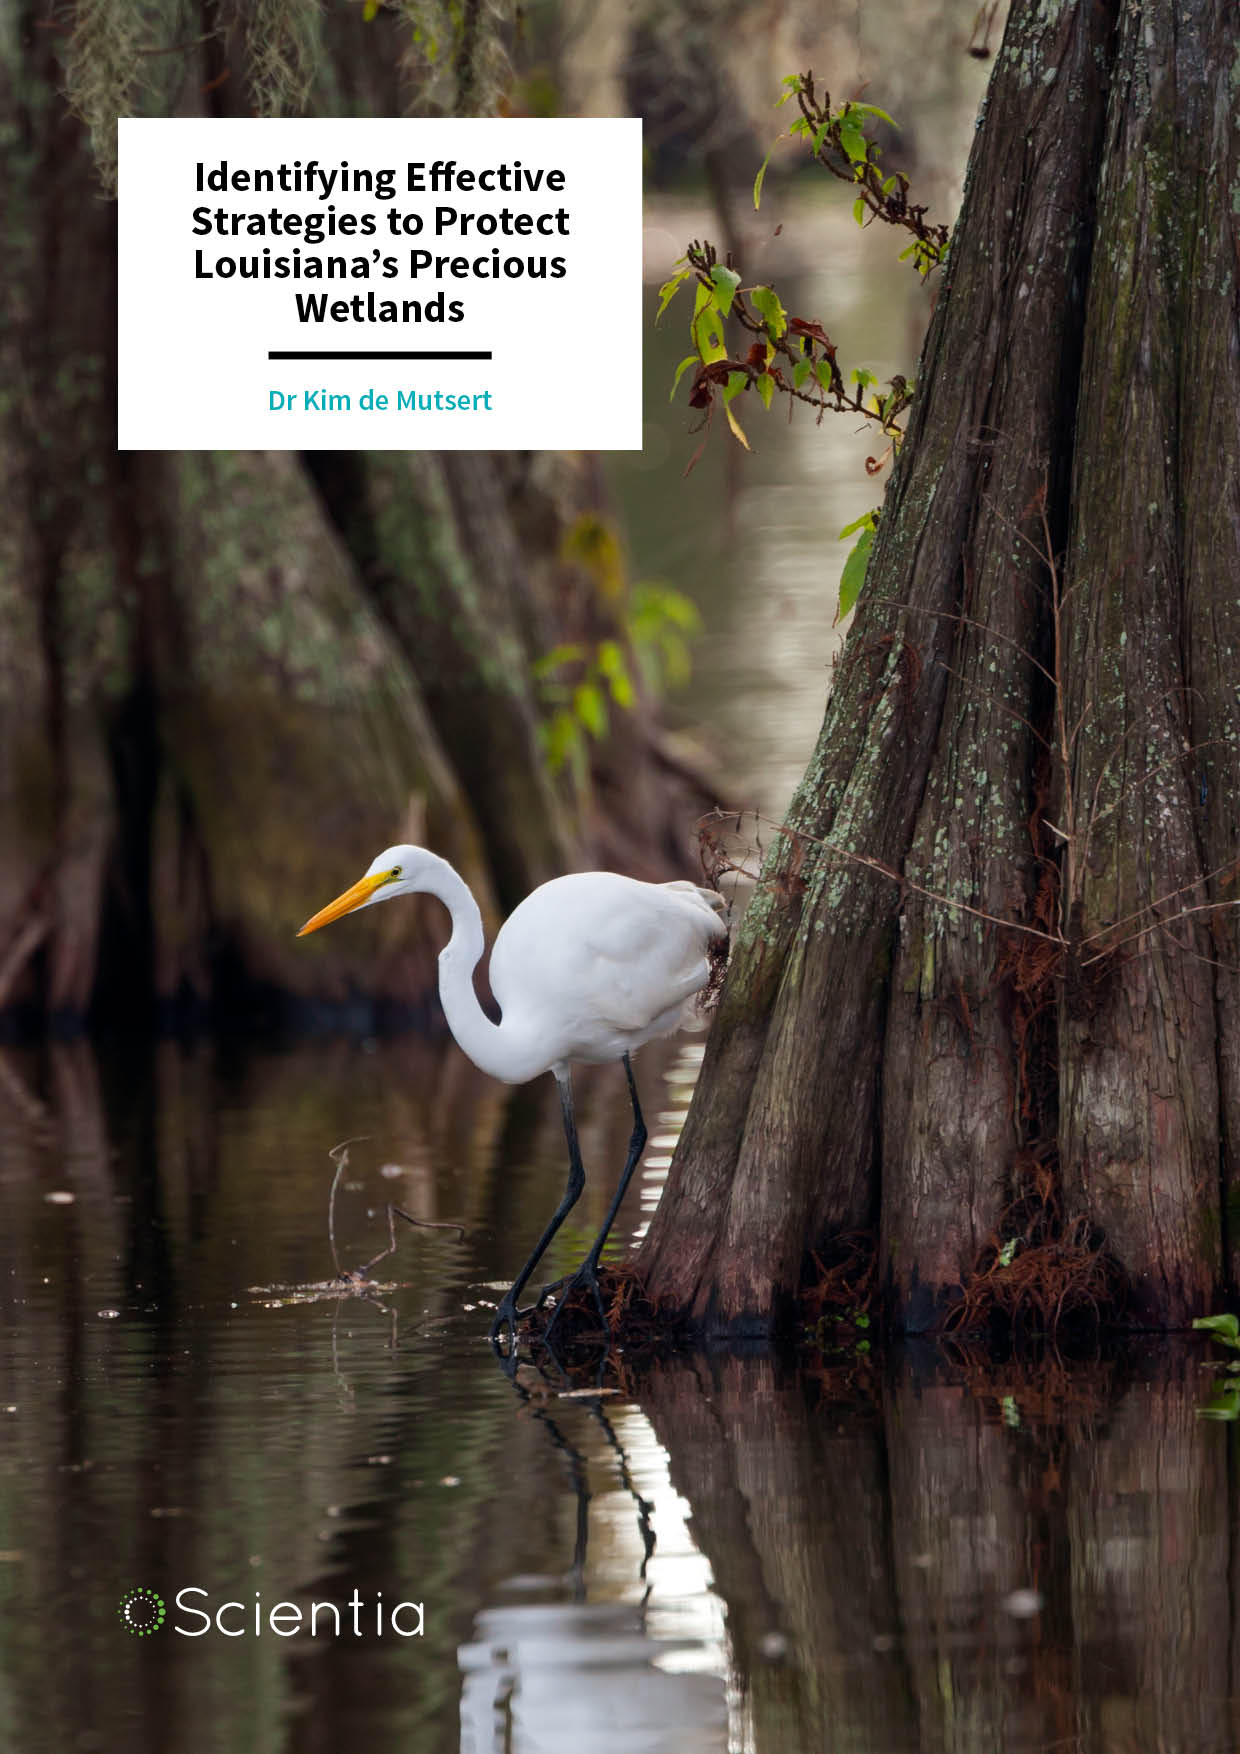 Dr Kim de Mutsert – Identifying Effective Strategies to Protect Louisiana’s Precious Wetlands